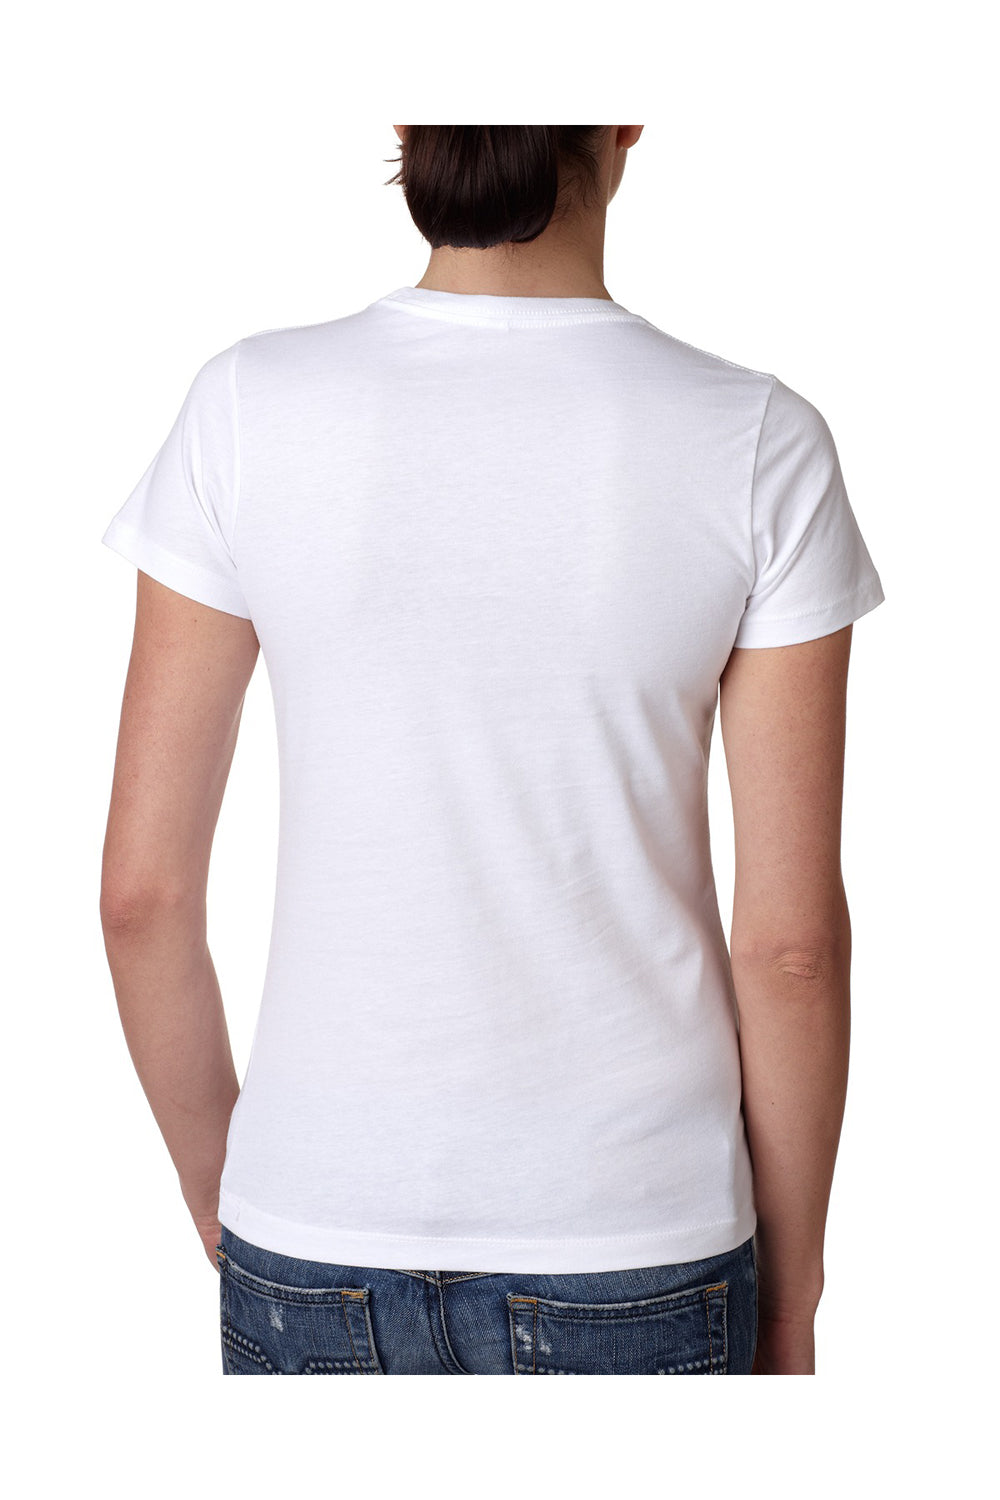 Next Level N3900 Womens Boyfriend Fine Jersey Short Sleeve Crewneck T-Shirt White Back